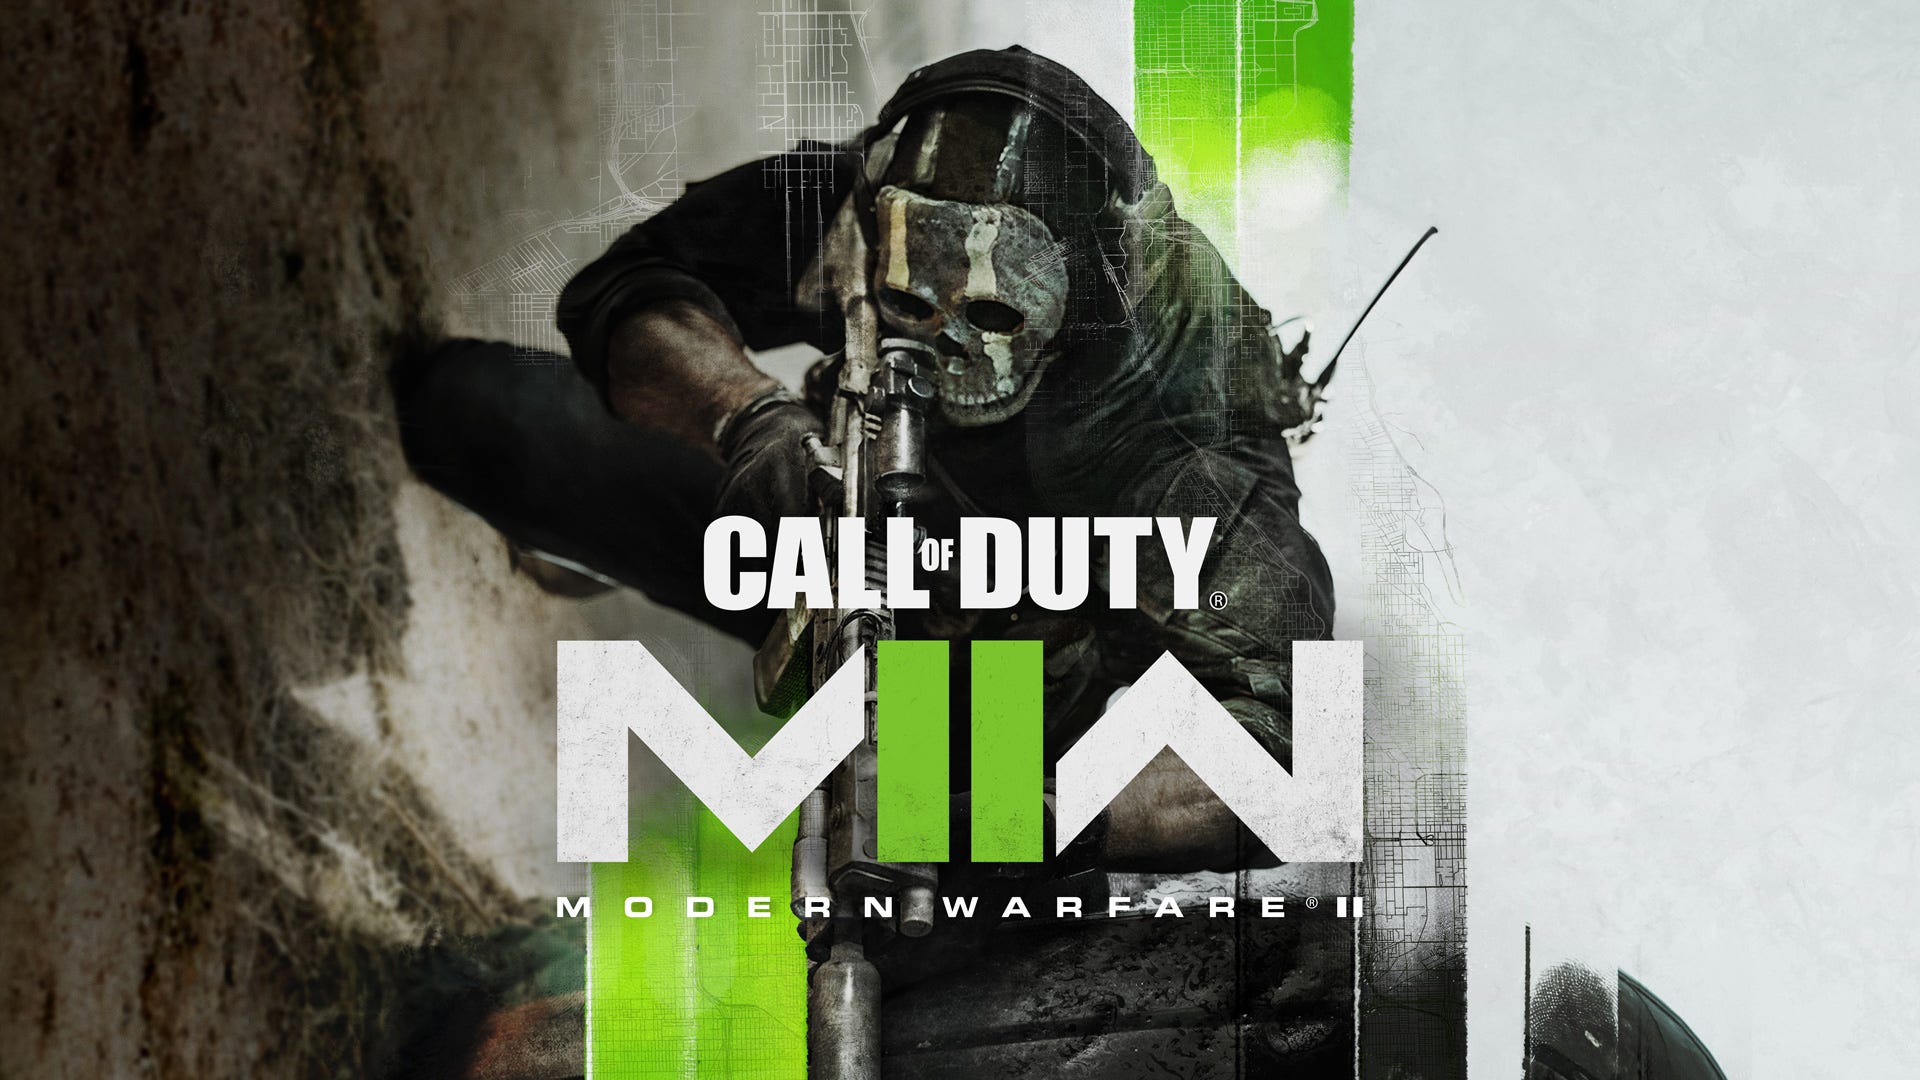 Call of Duty: Modern Warfare 2 beta rewards officially revealed